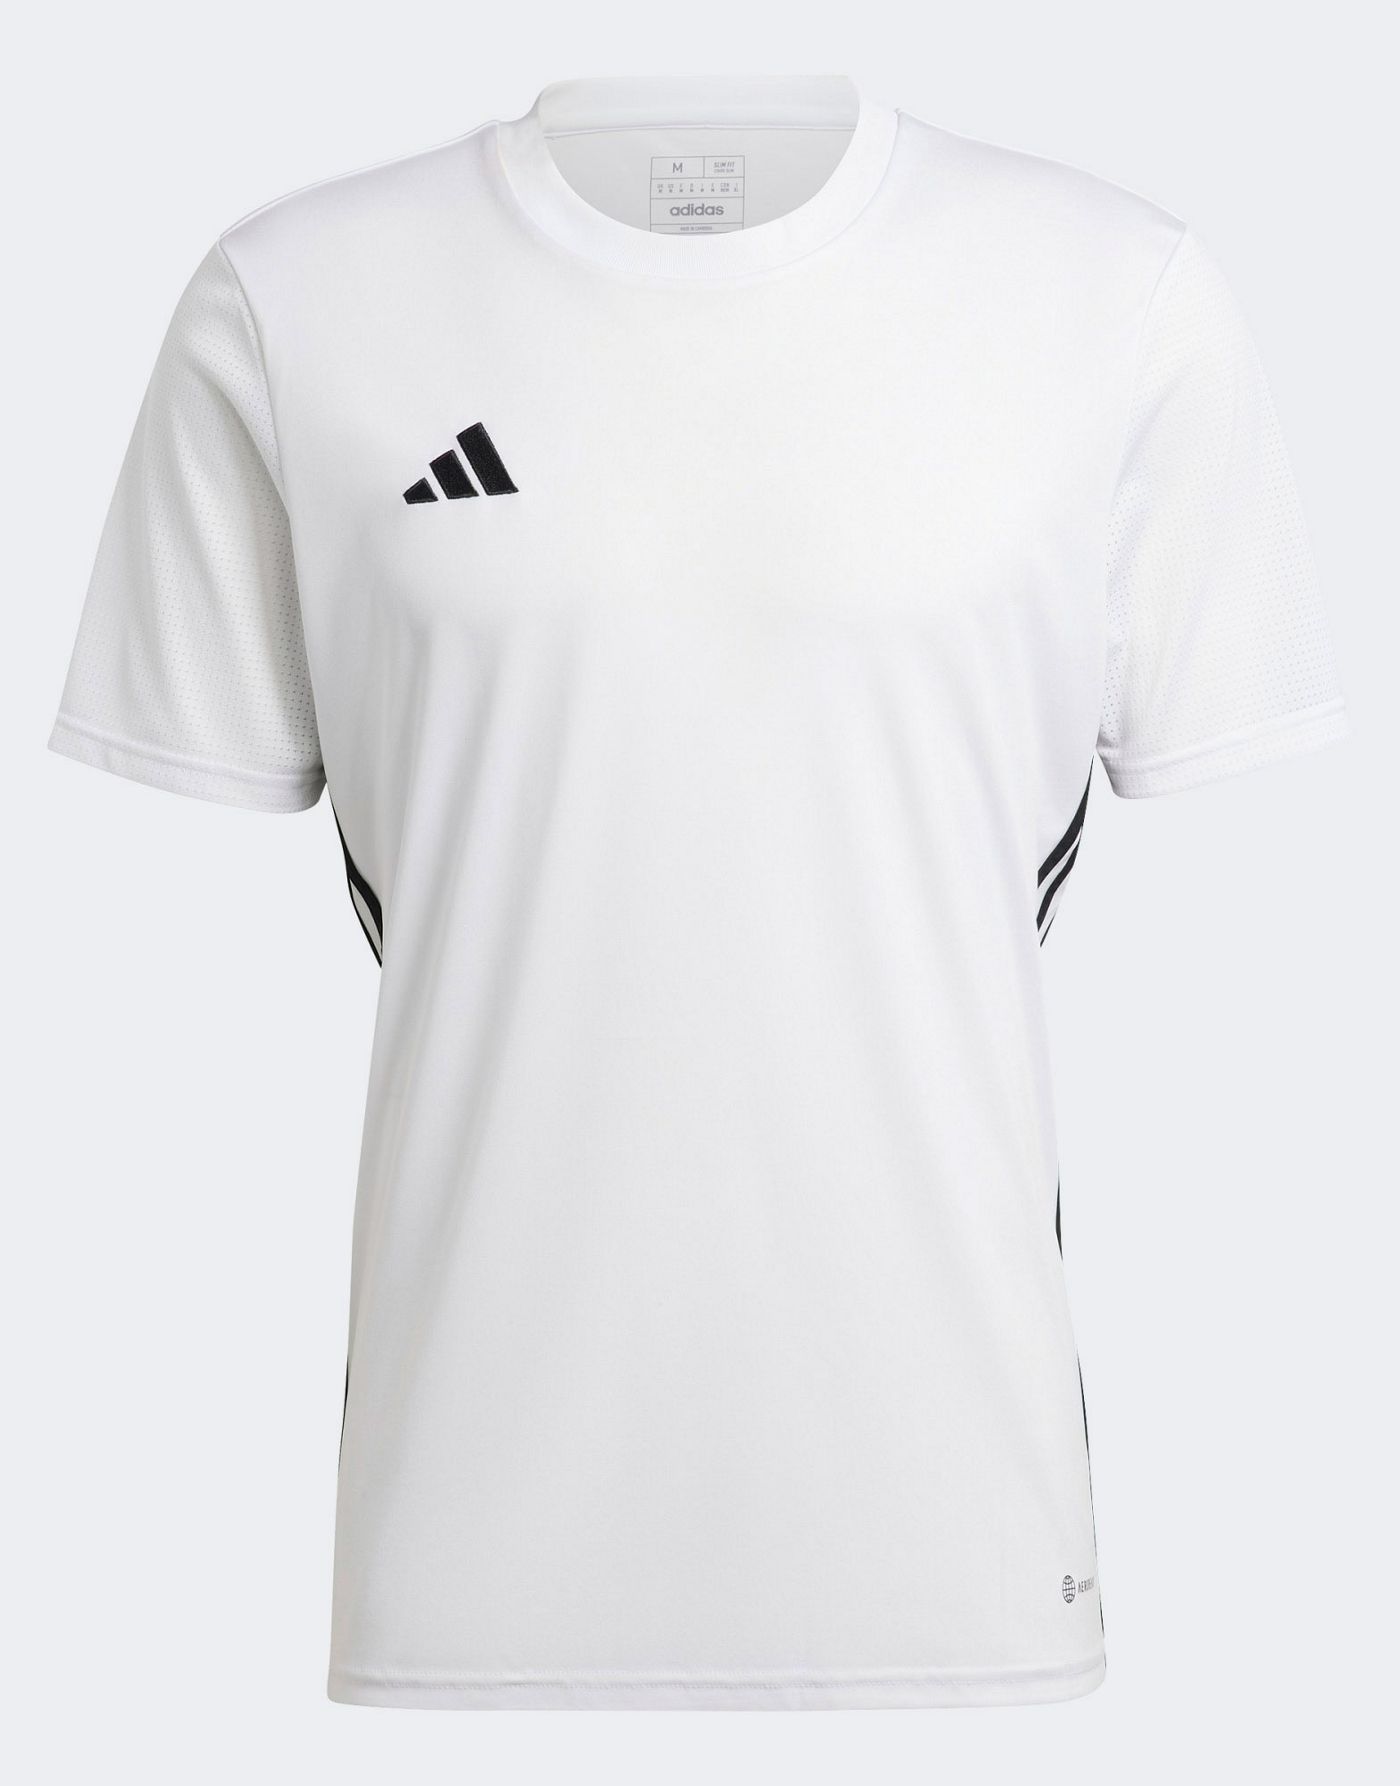 adidas performance Tabela 23 Jersey t-shirt in White